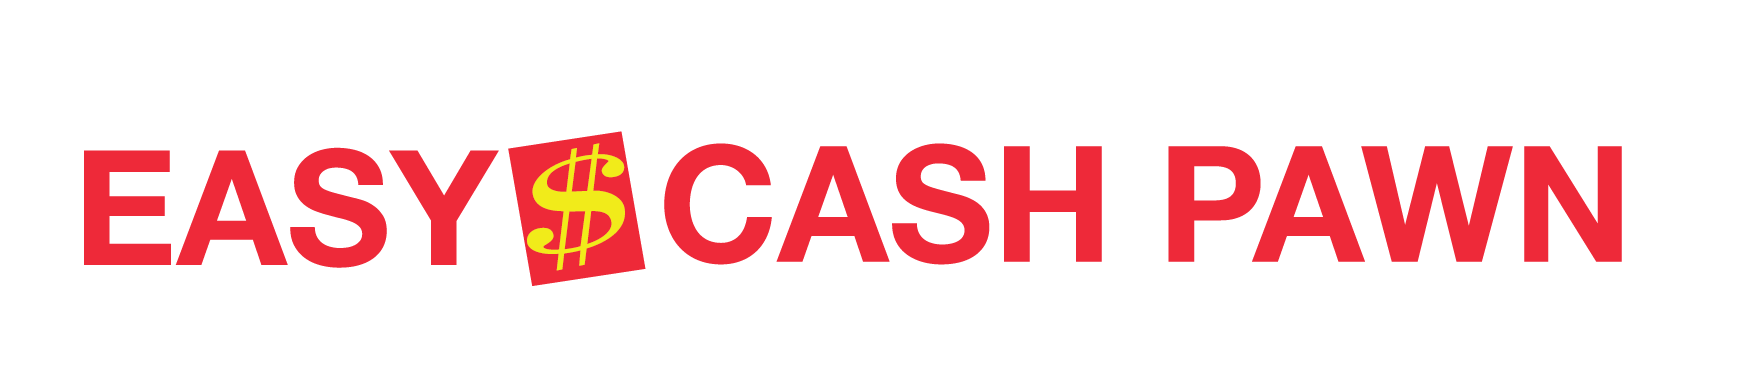 Easy cash pawn logo Horizontal RED